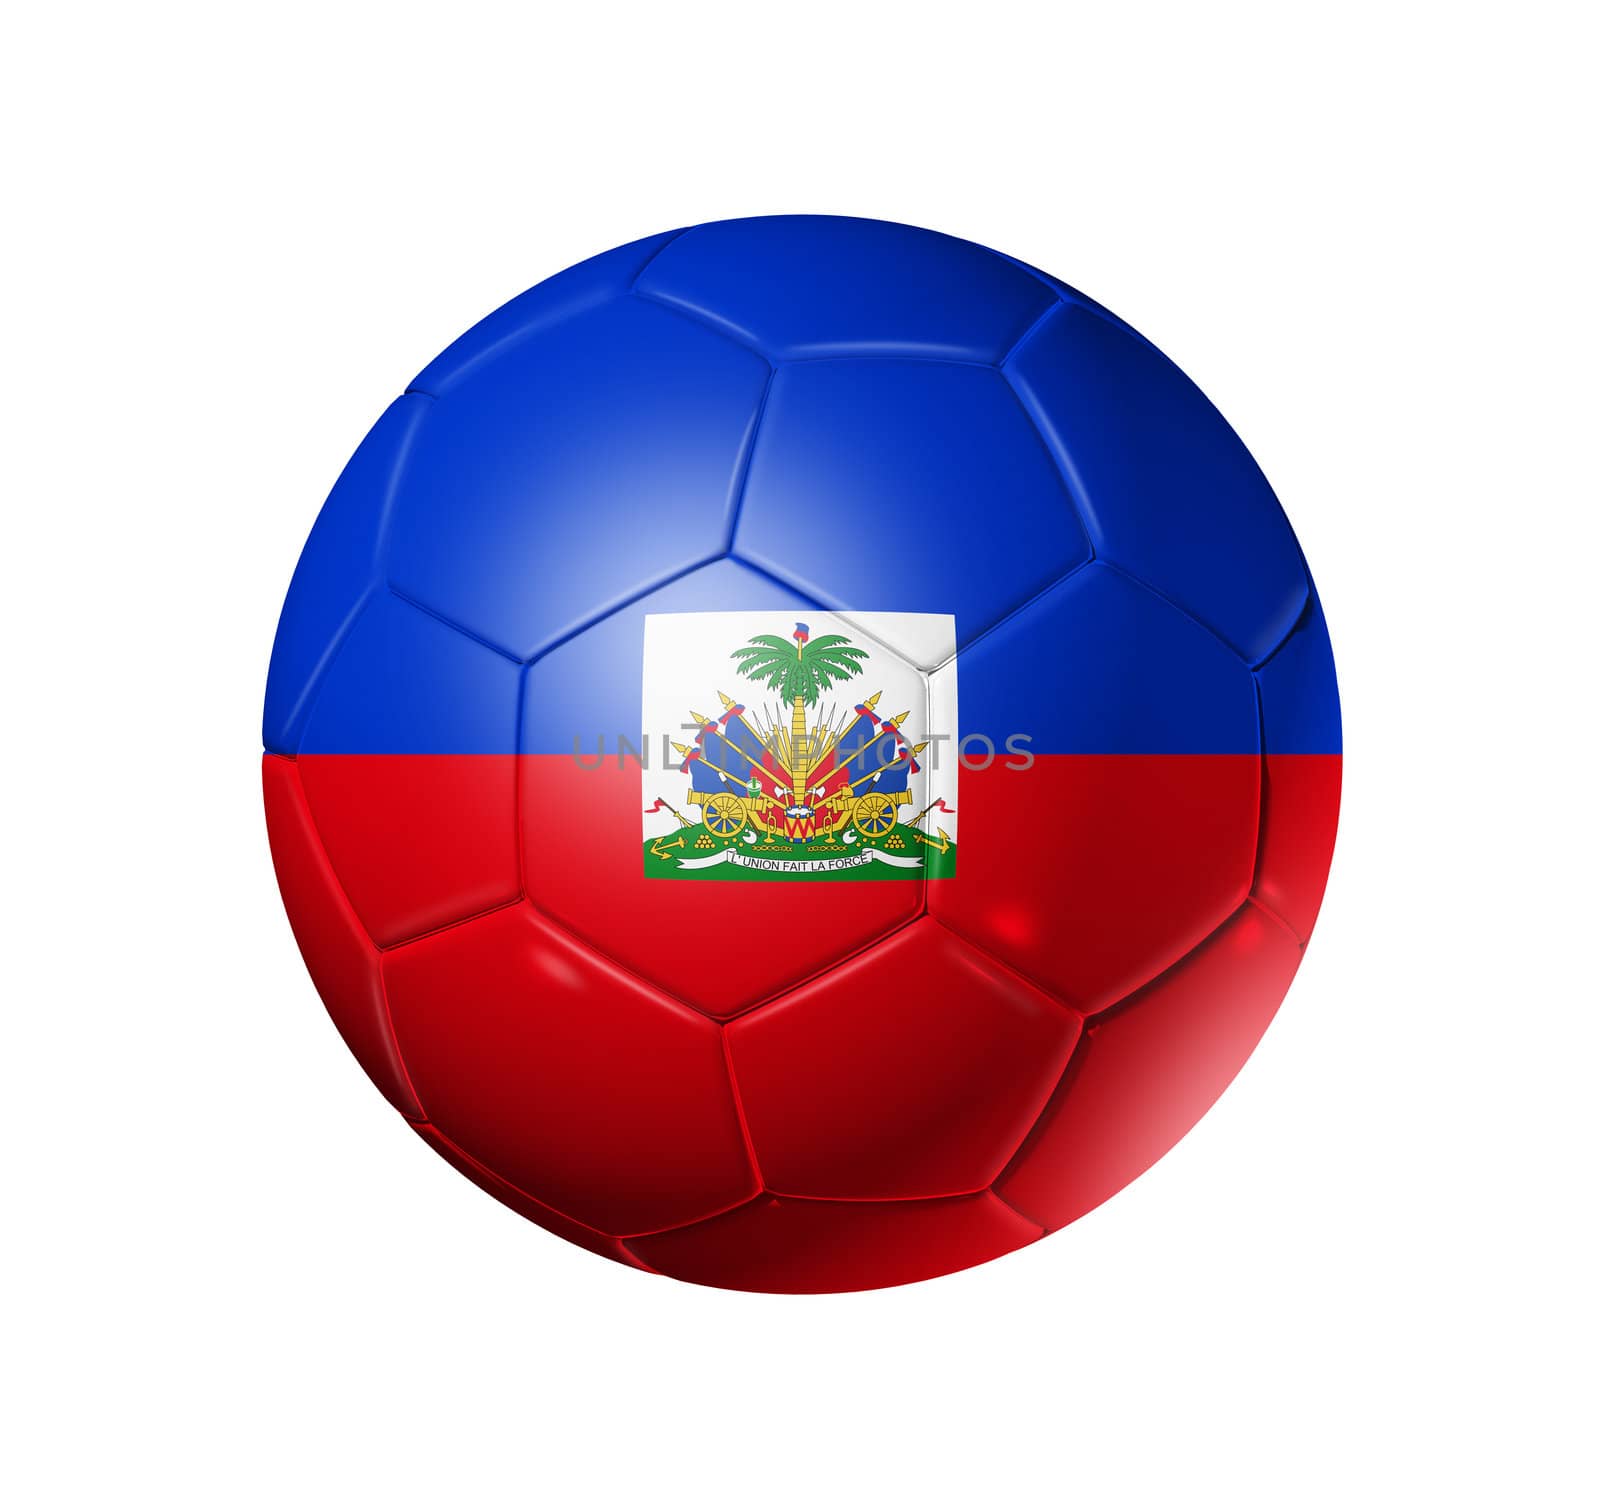 Soccer football ball with Haiti flag by daboost